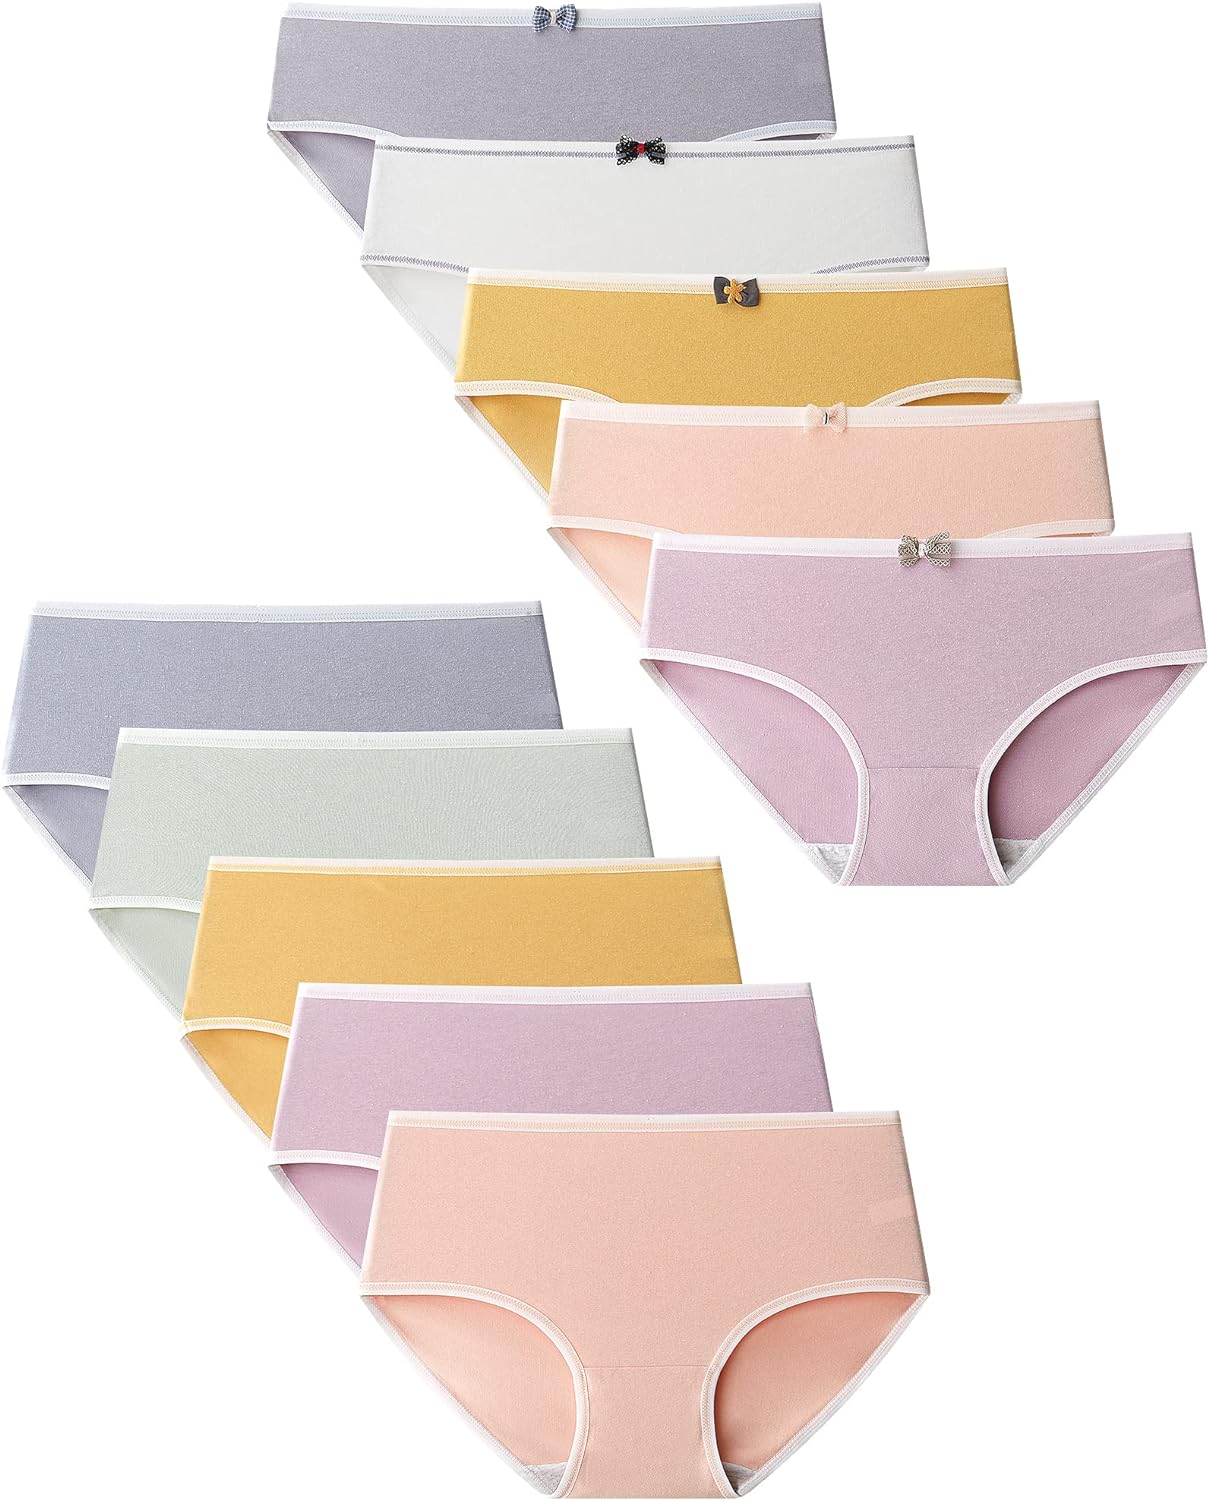 Adorel Teen Girls Panties Mid Waist Underpants Briefs Pack of 10